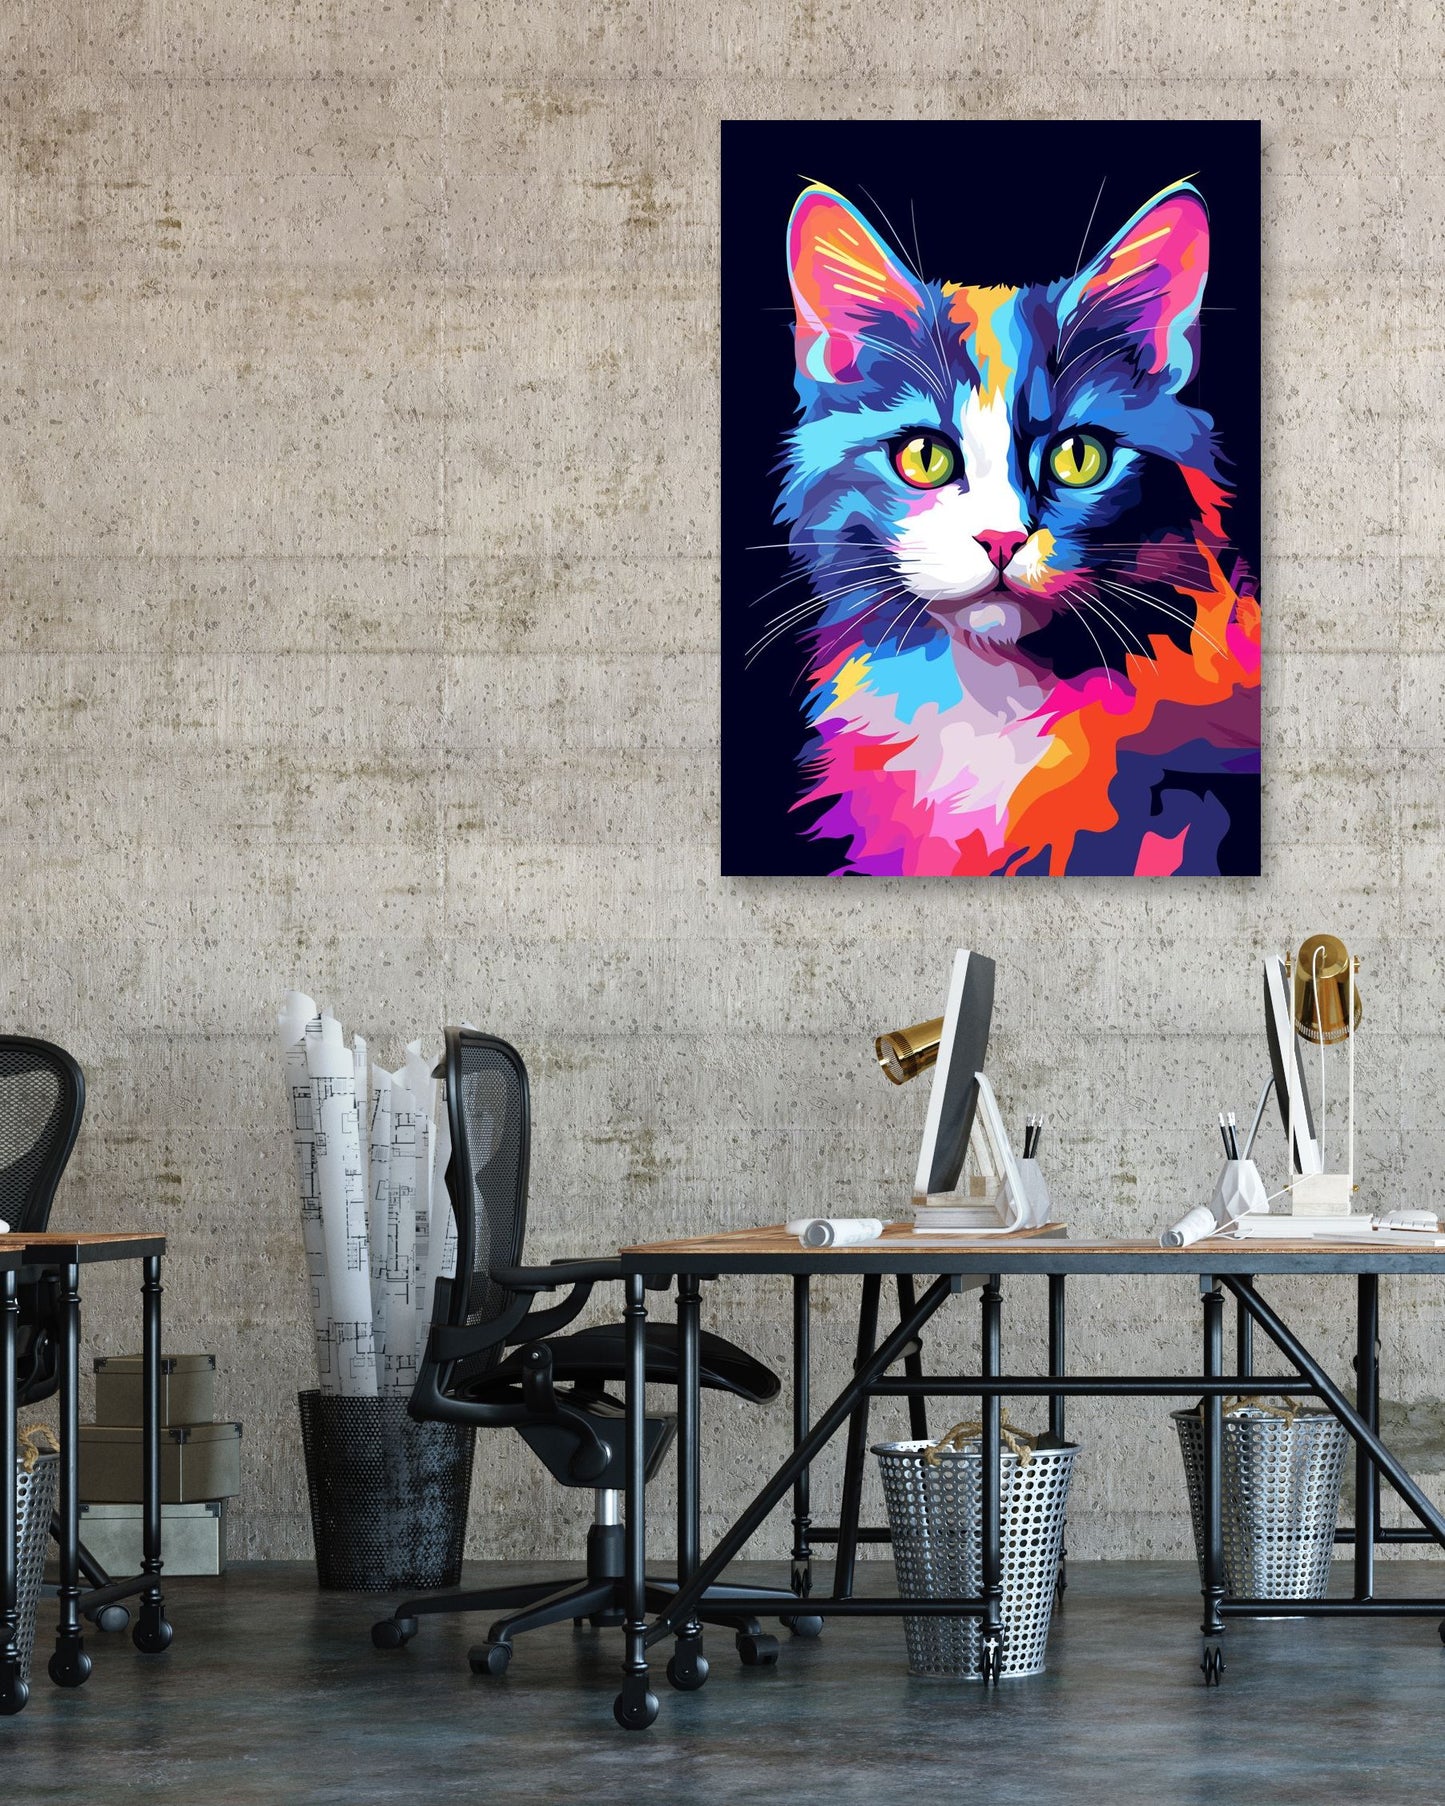 Cat PopART - @GreyArt